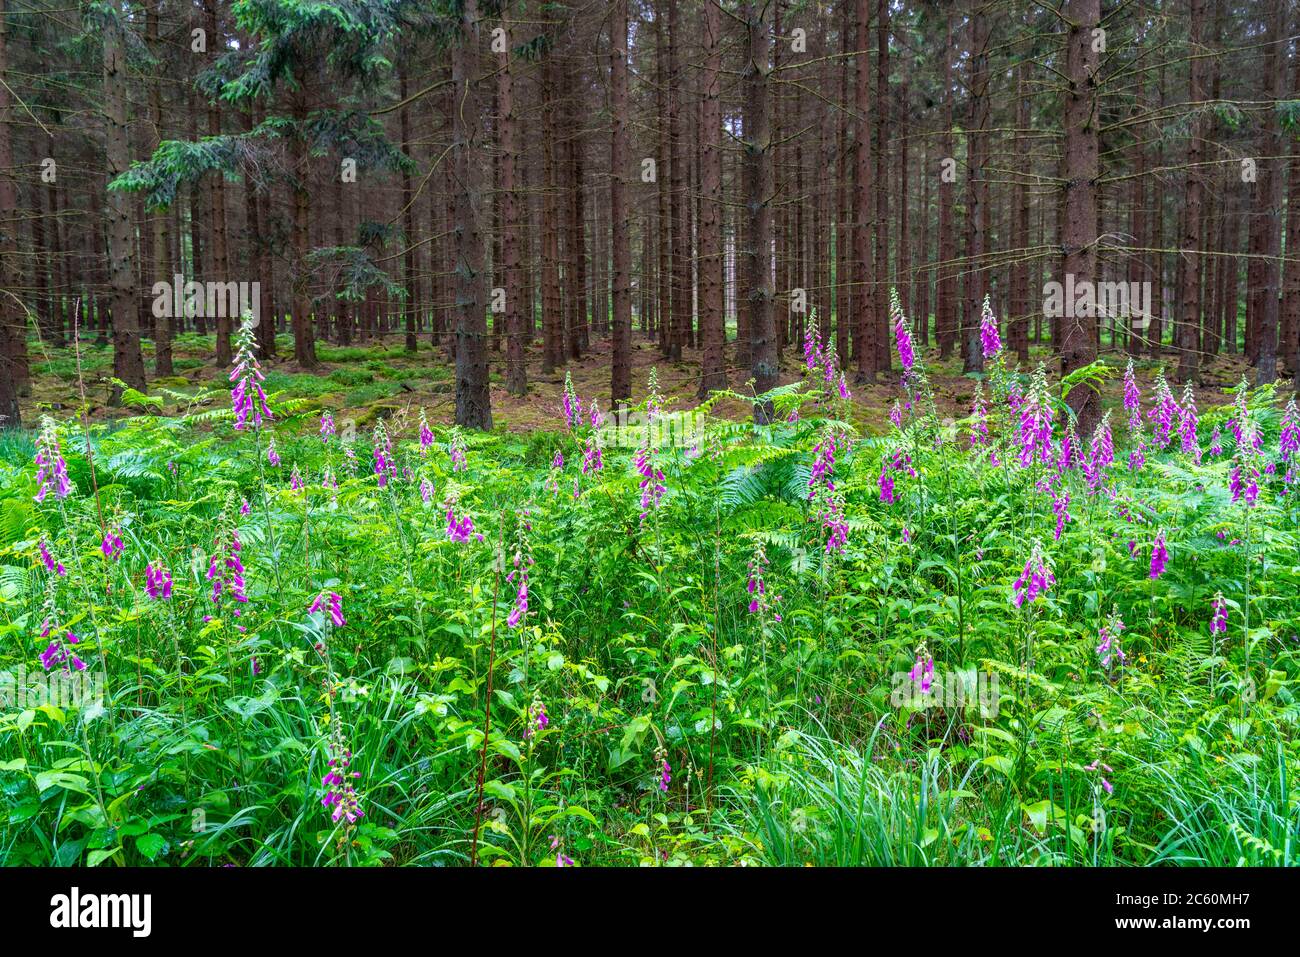 Struffelt Nature Reserve, Forest near Roetgen-Rott, red foxglove plant, poisonous, Eifel, NRW, Germany Stock Photo